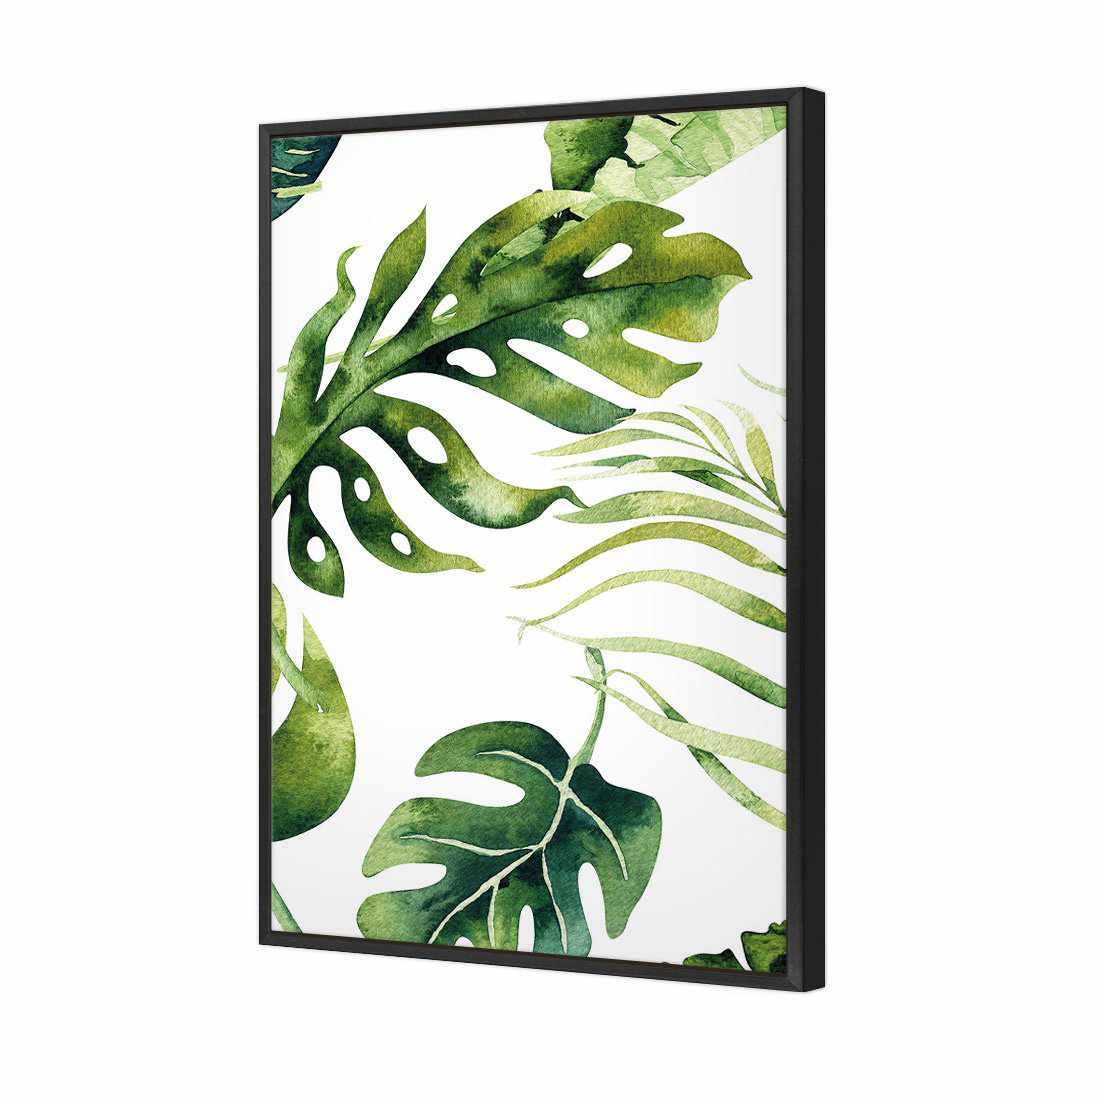 Fascinating Foliage Version 01 Canvas Art-Canvas-Wall Art Designs-45x30cm-Canvas - Black Frame-Wall Art Designs